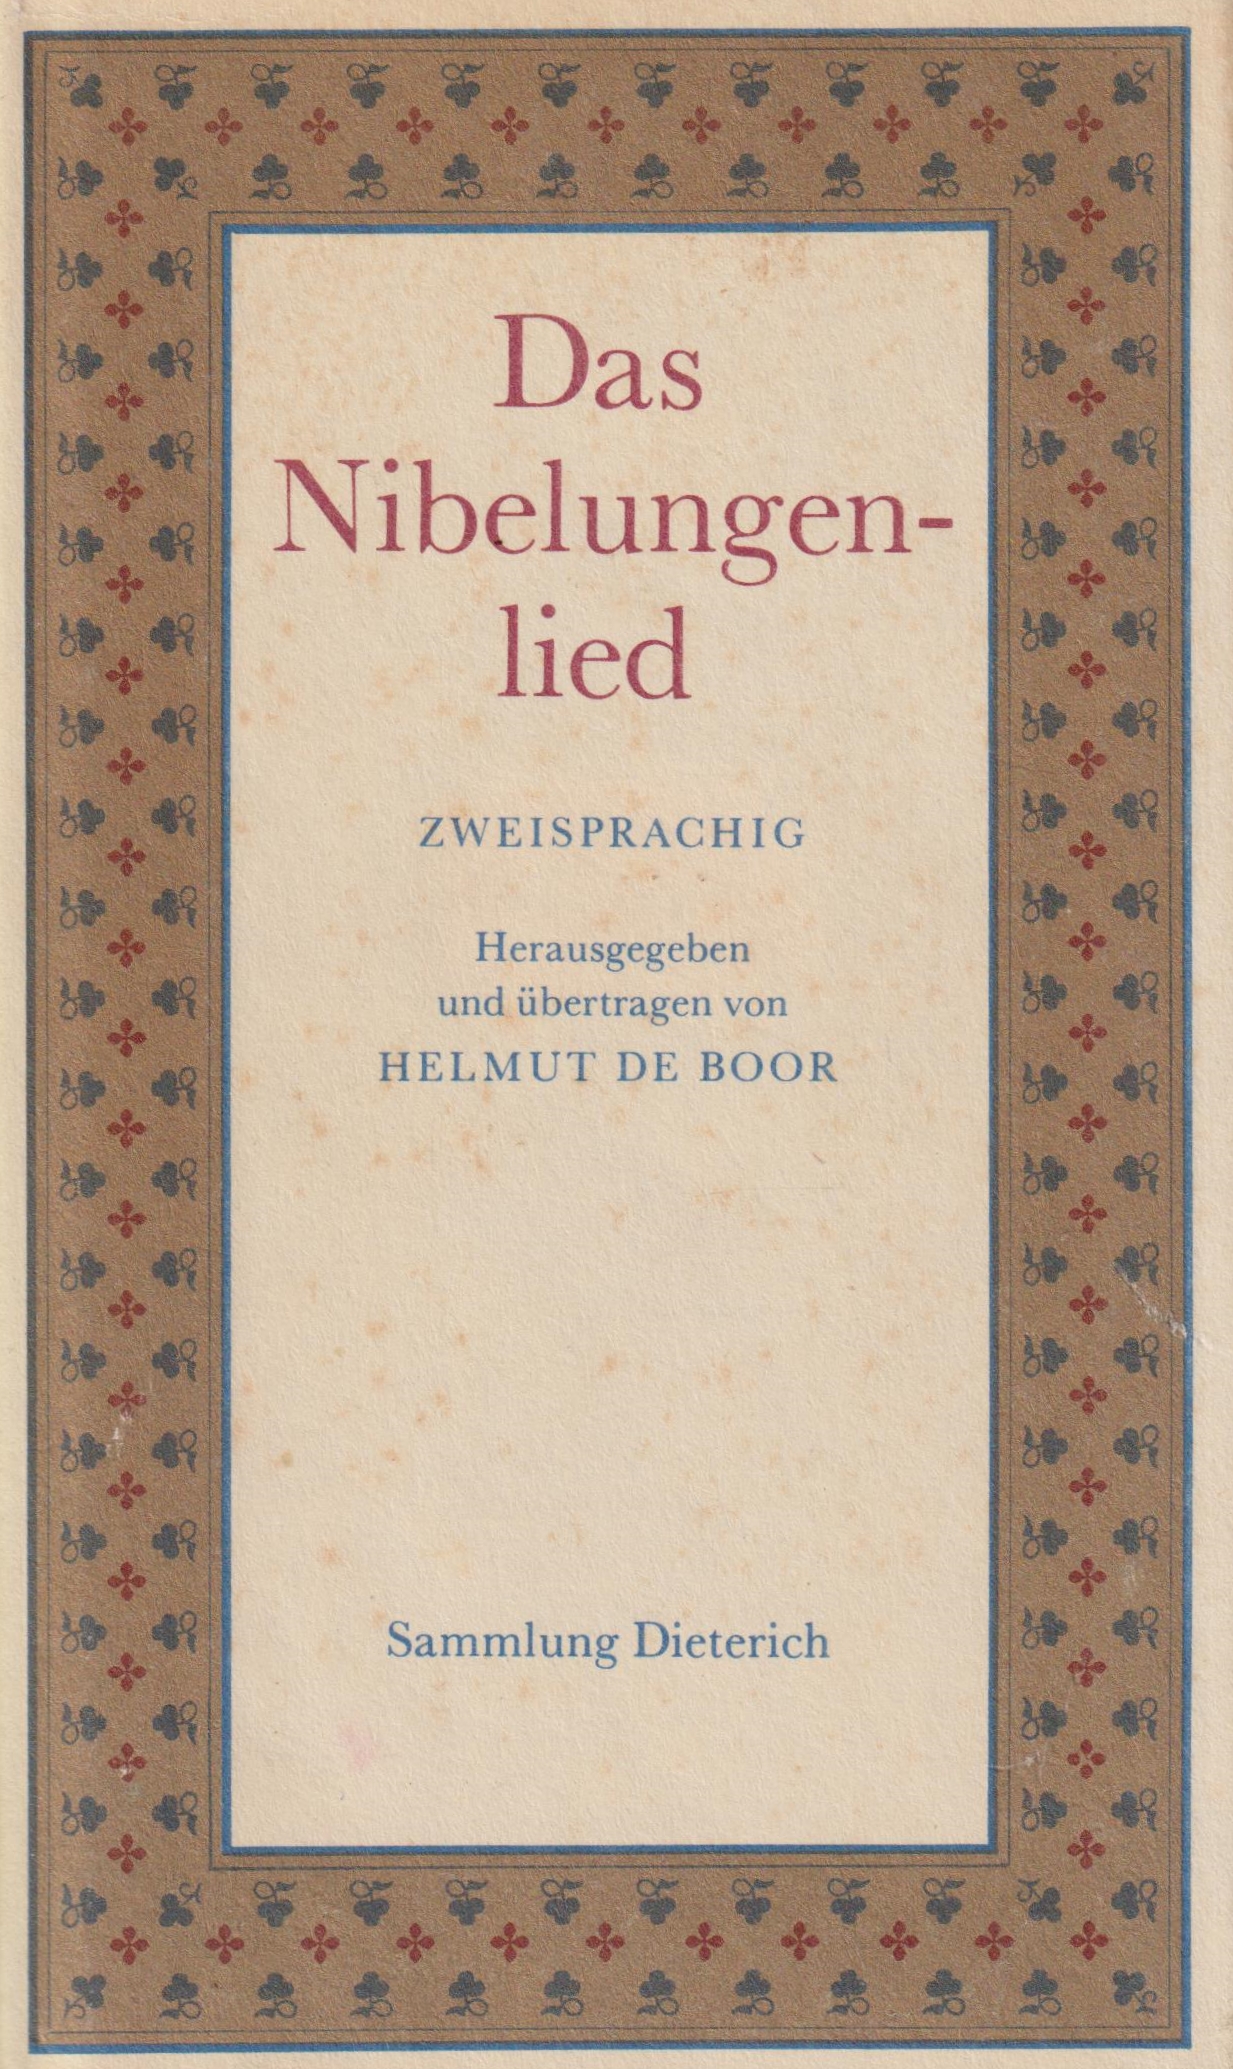 Das Nibelungenlied Zweisprachig - Boor, Helmut de (Hrsg.)